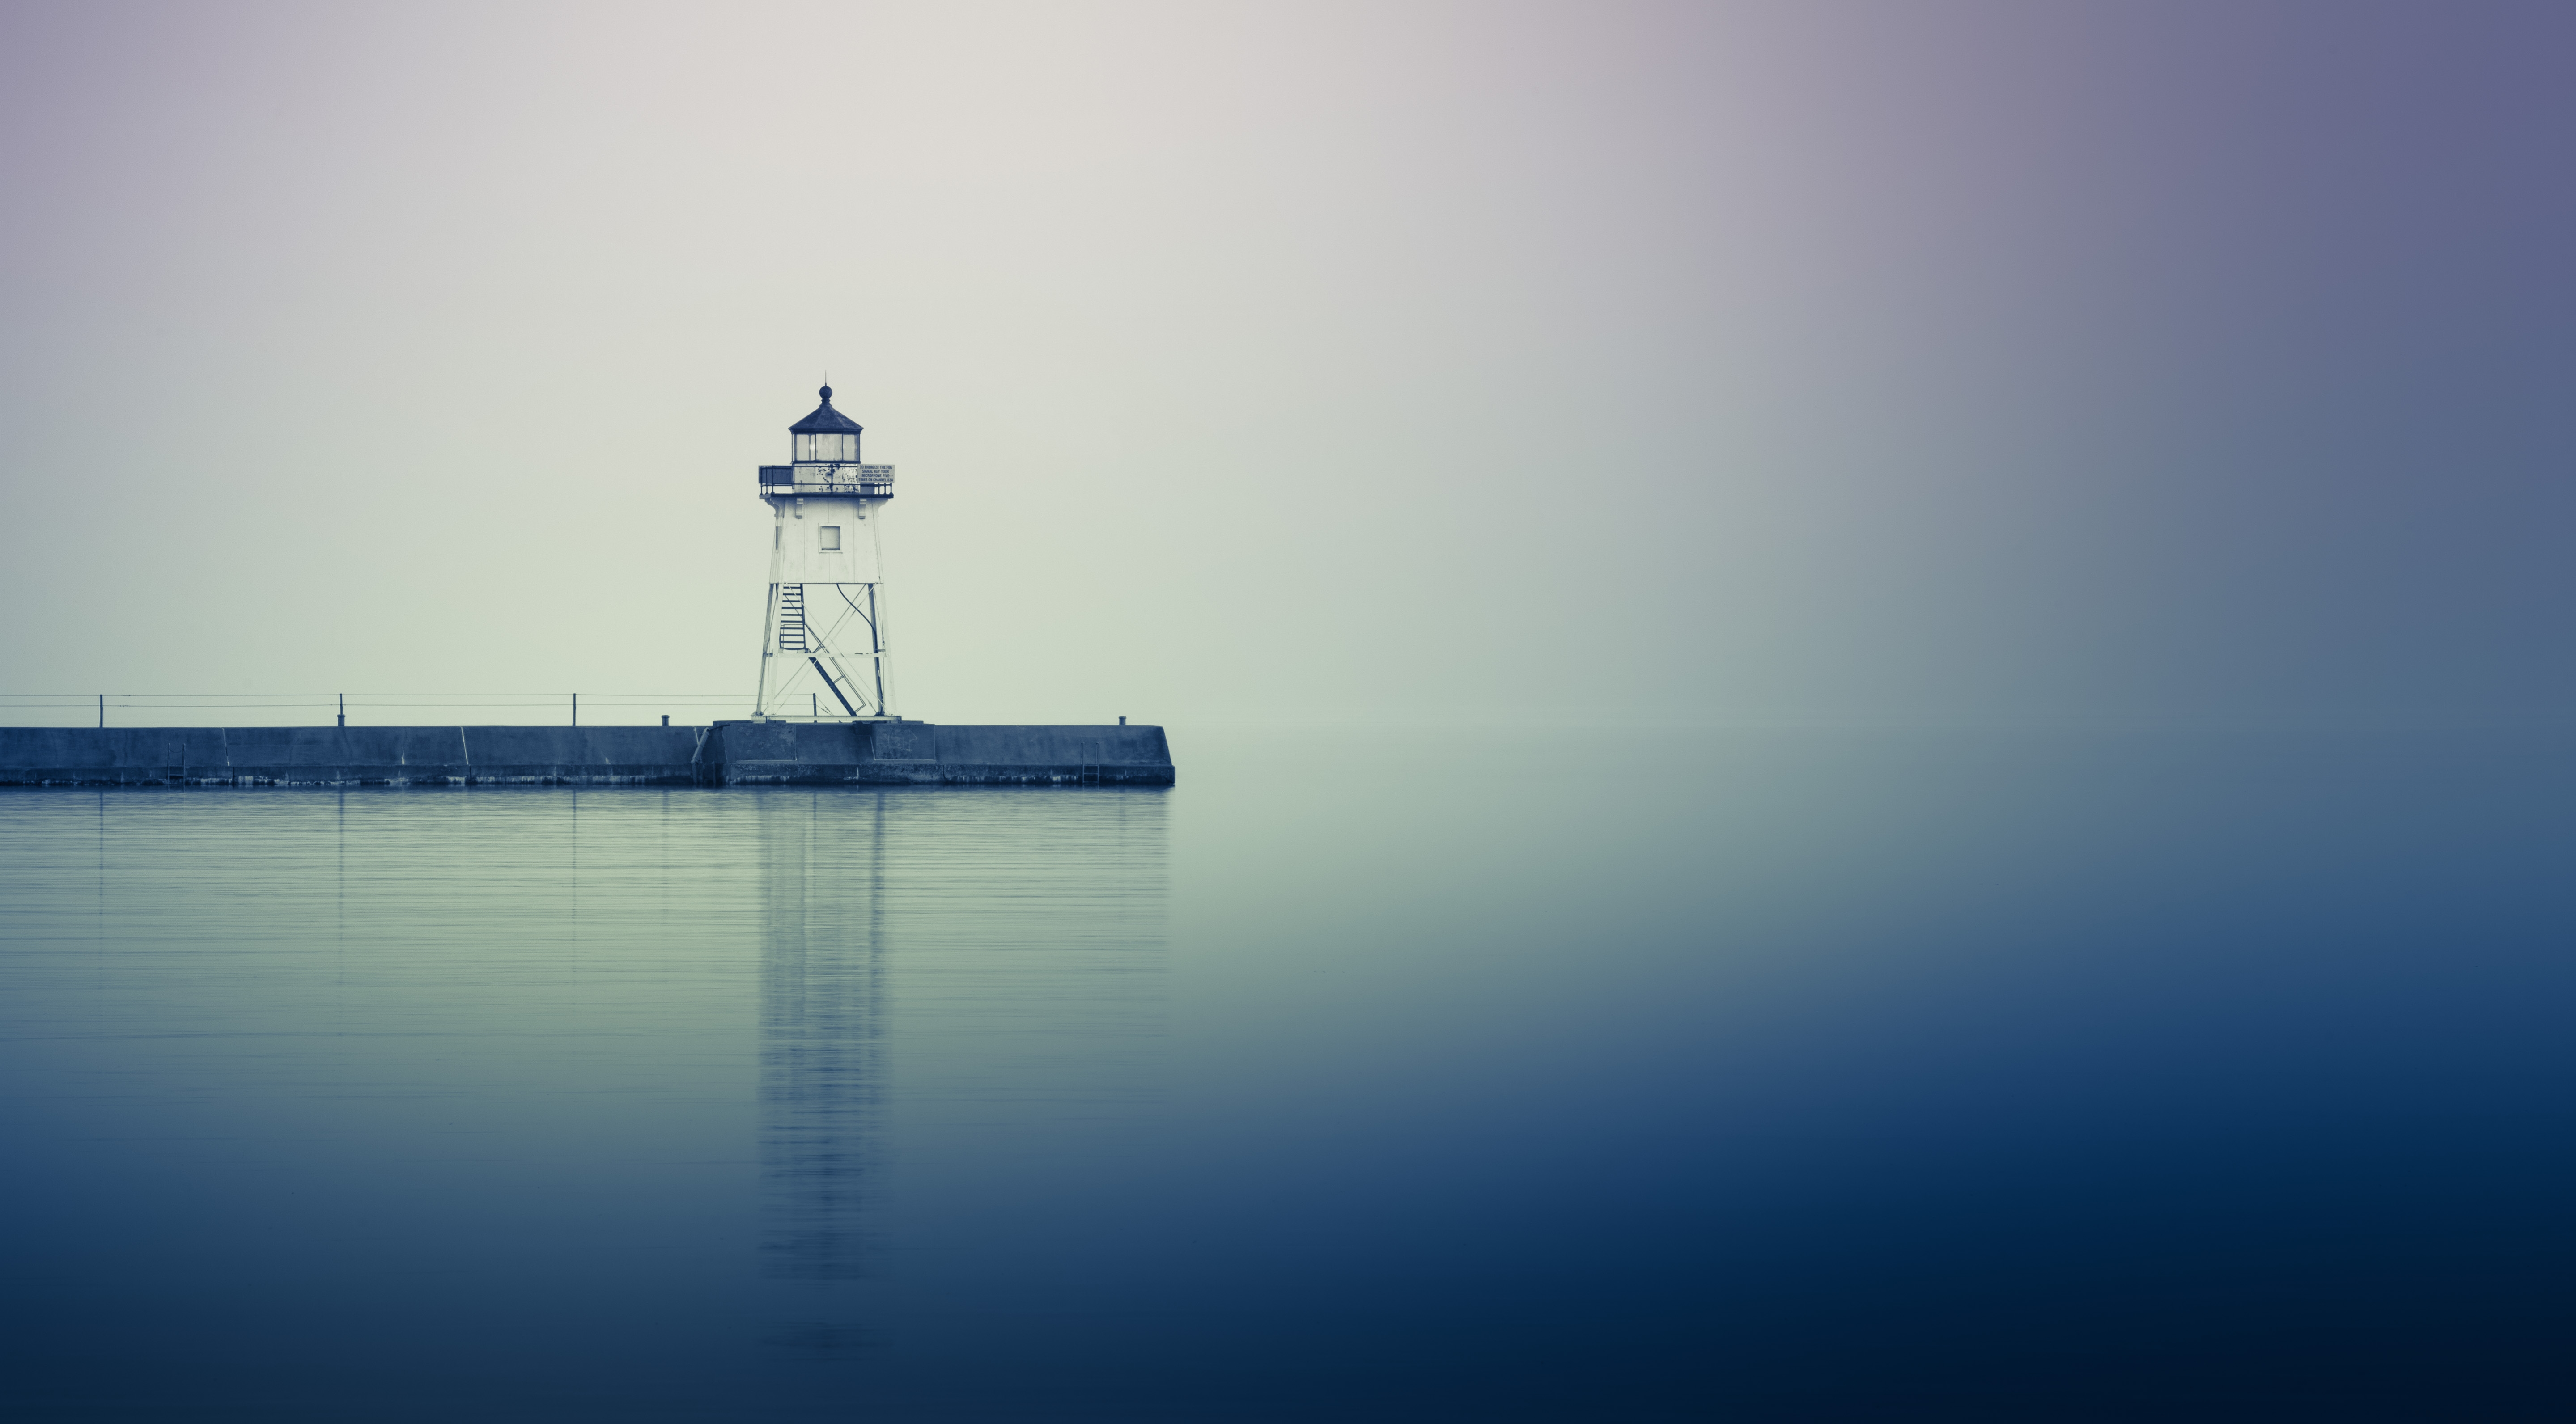 HD wallpaper, Lighthouse, 5K, Body Of Water, Jetty, Minnesota, Grand Marais, Reflection, Harbor